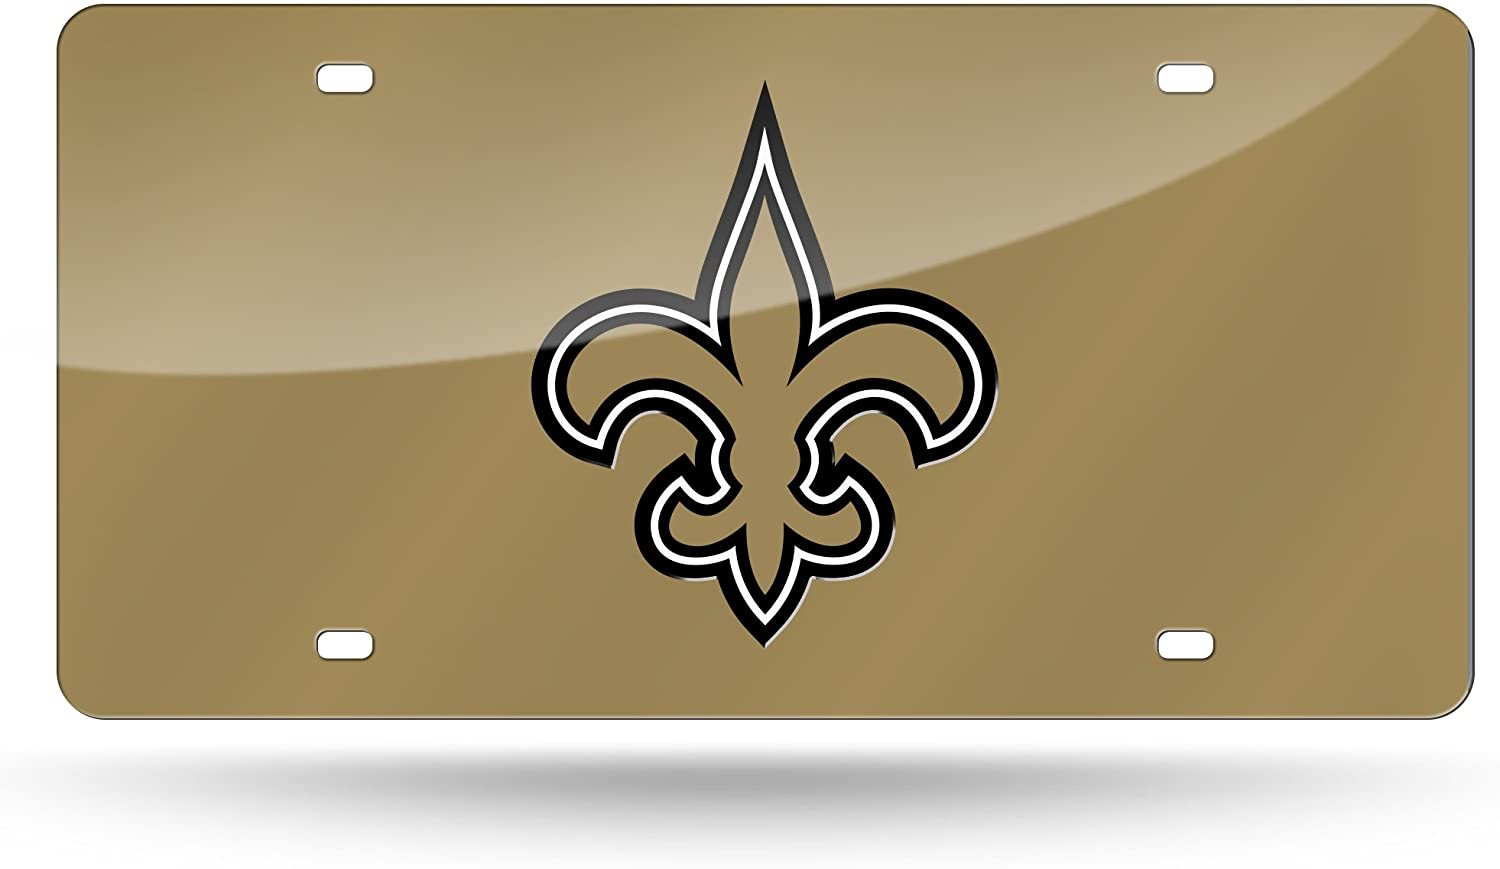 New Orleans Saints Premium Laser Cut Tag License Plate, Fleur De Lis, Gold Mirrored Acrylic Inlaid, 12x6 Inch